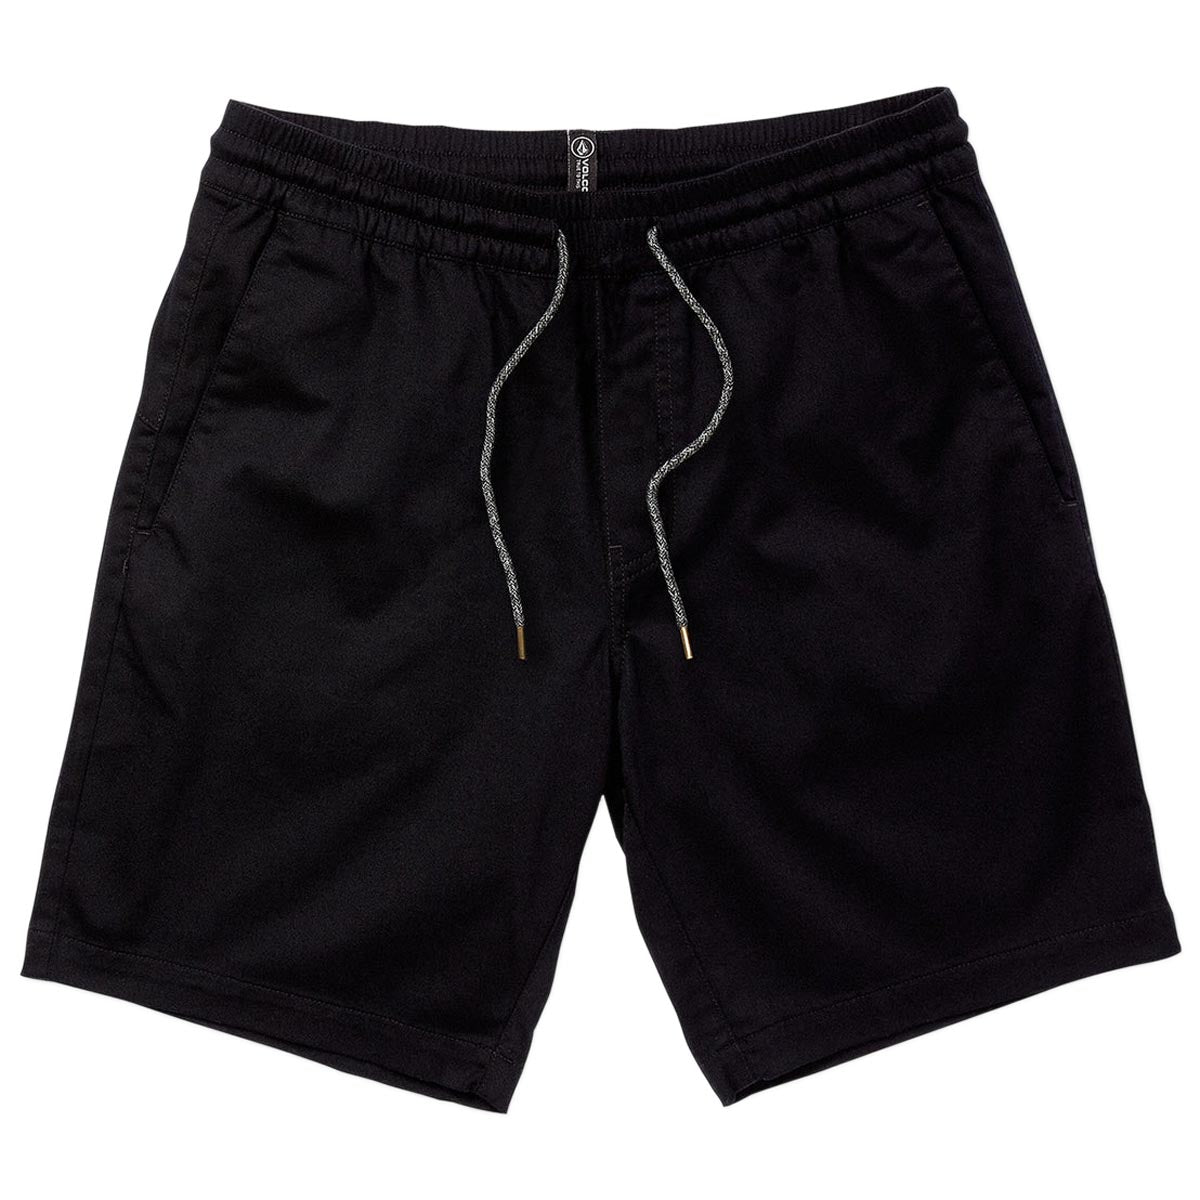 Volcom Frickin Ew 19 Shorts - Black image 1